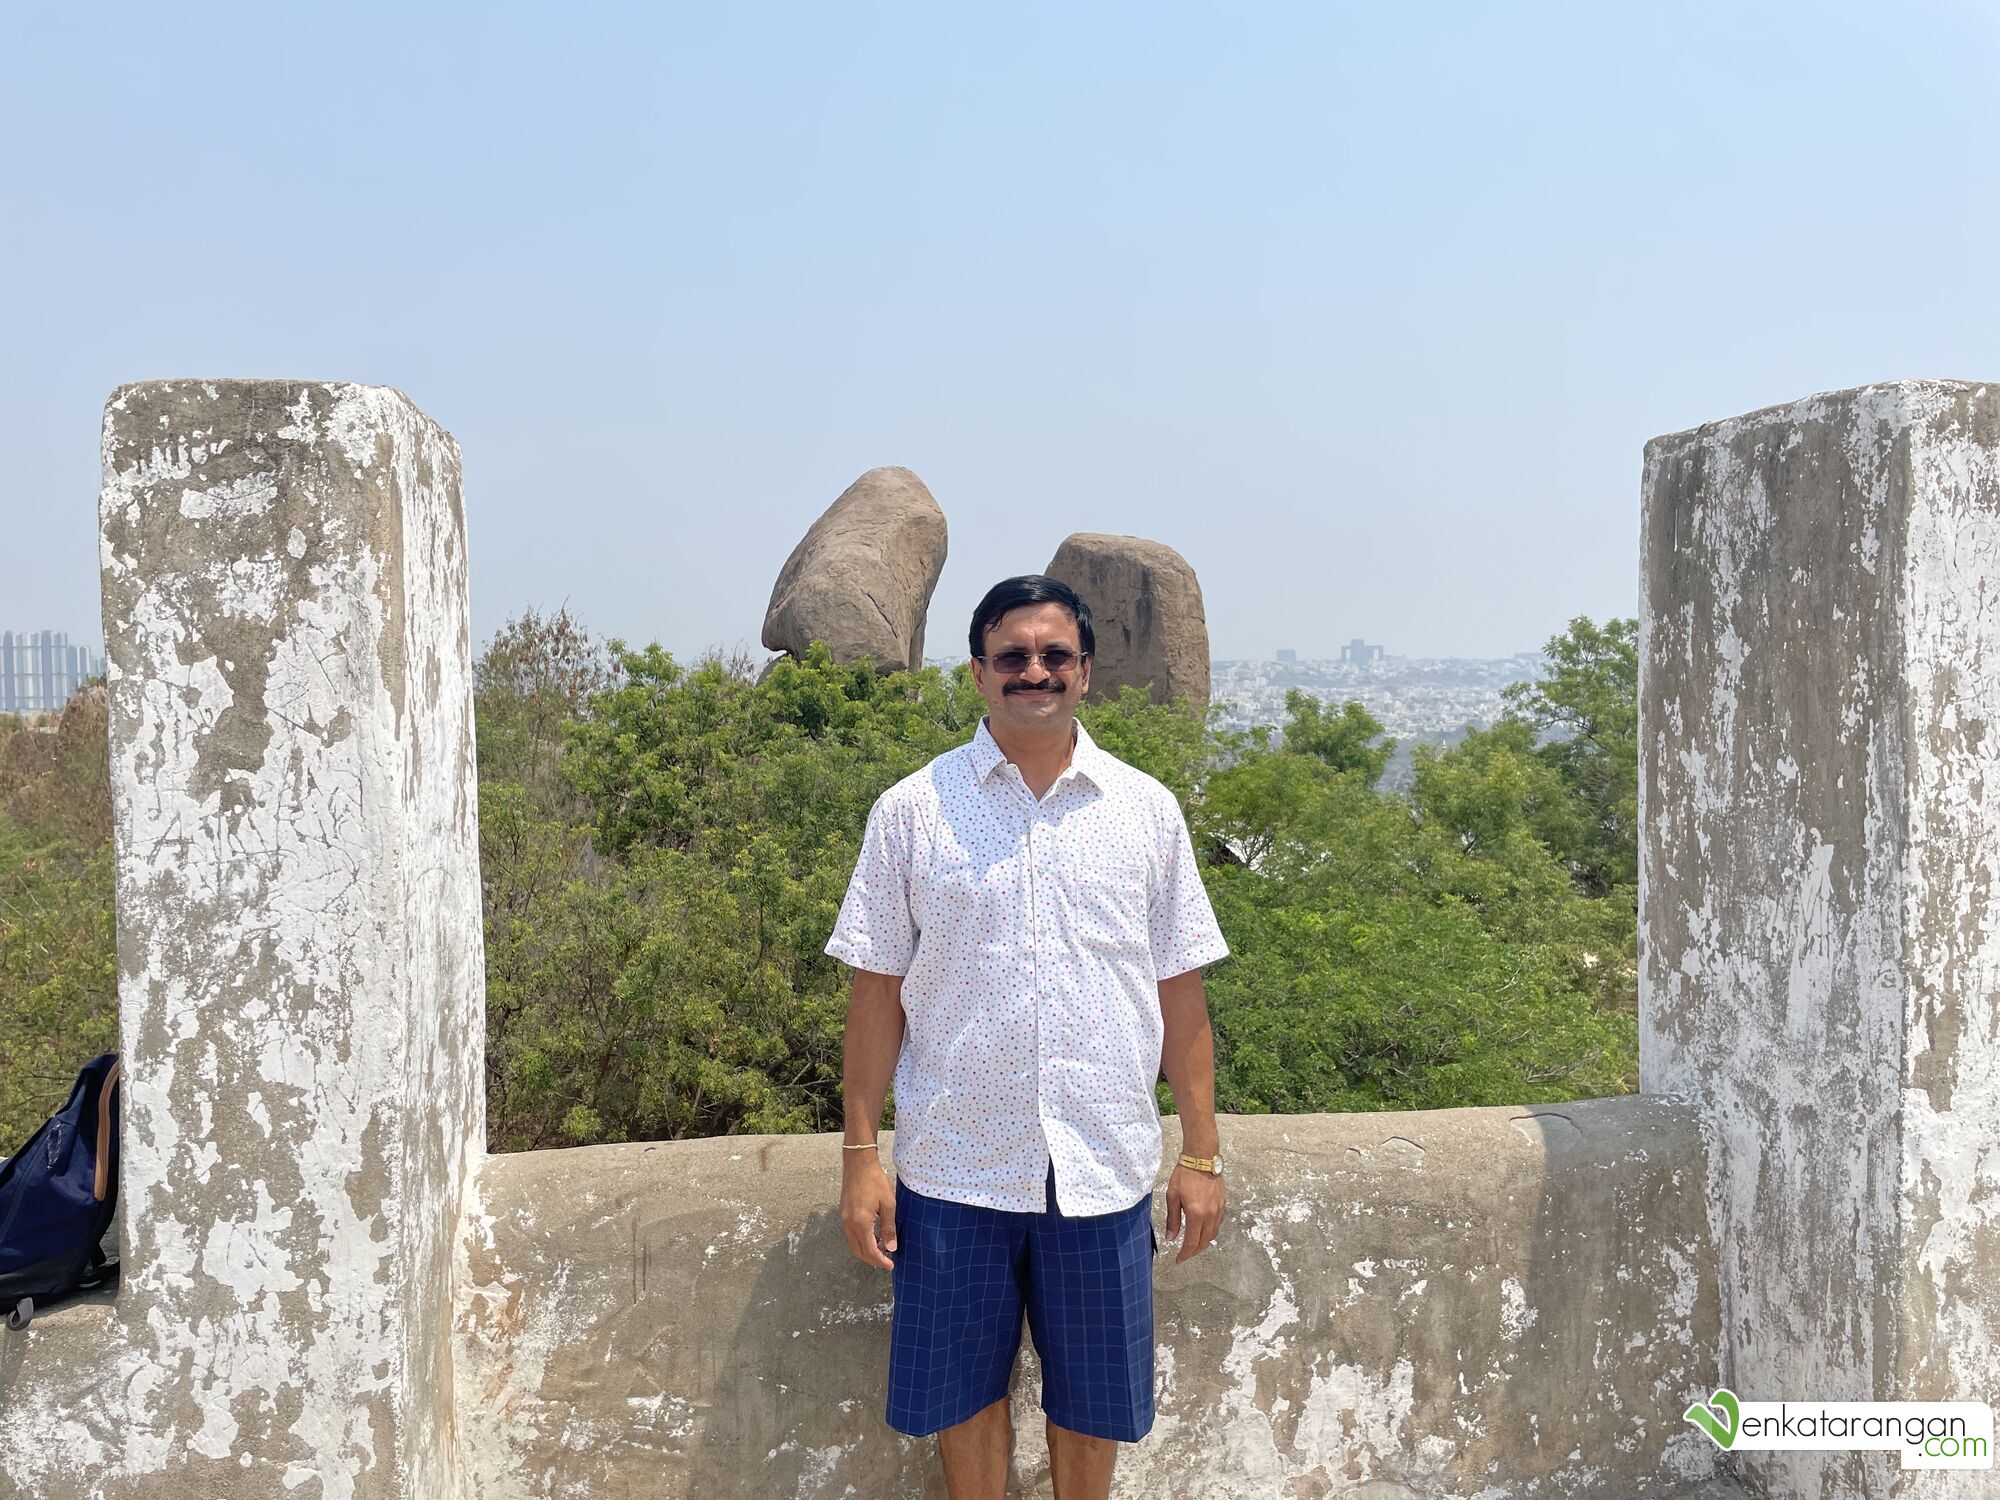 Venkatarangan Thirumalai in the open terrace in front of the darbar hall, Golconda Fort